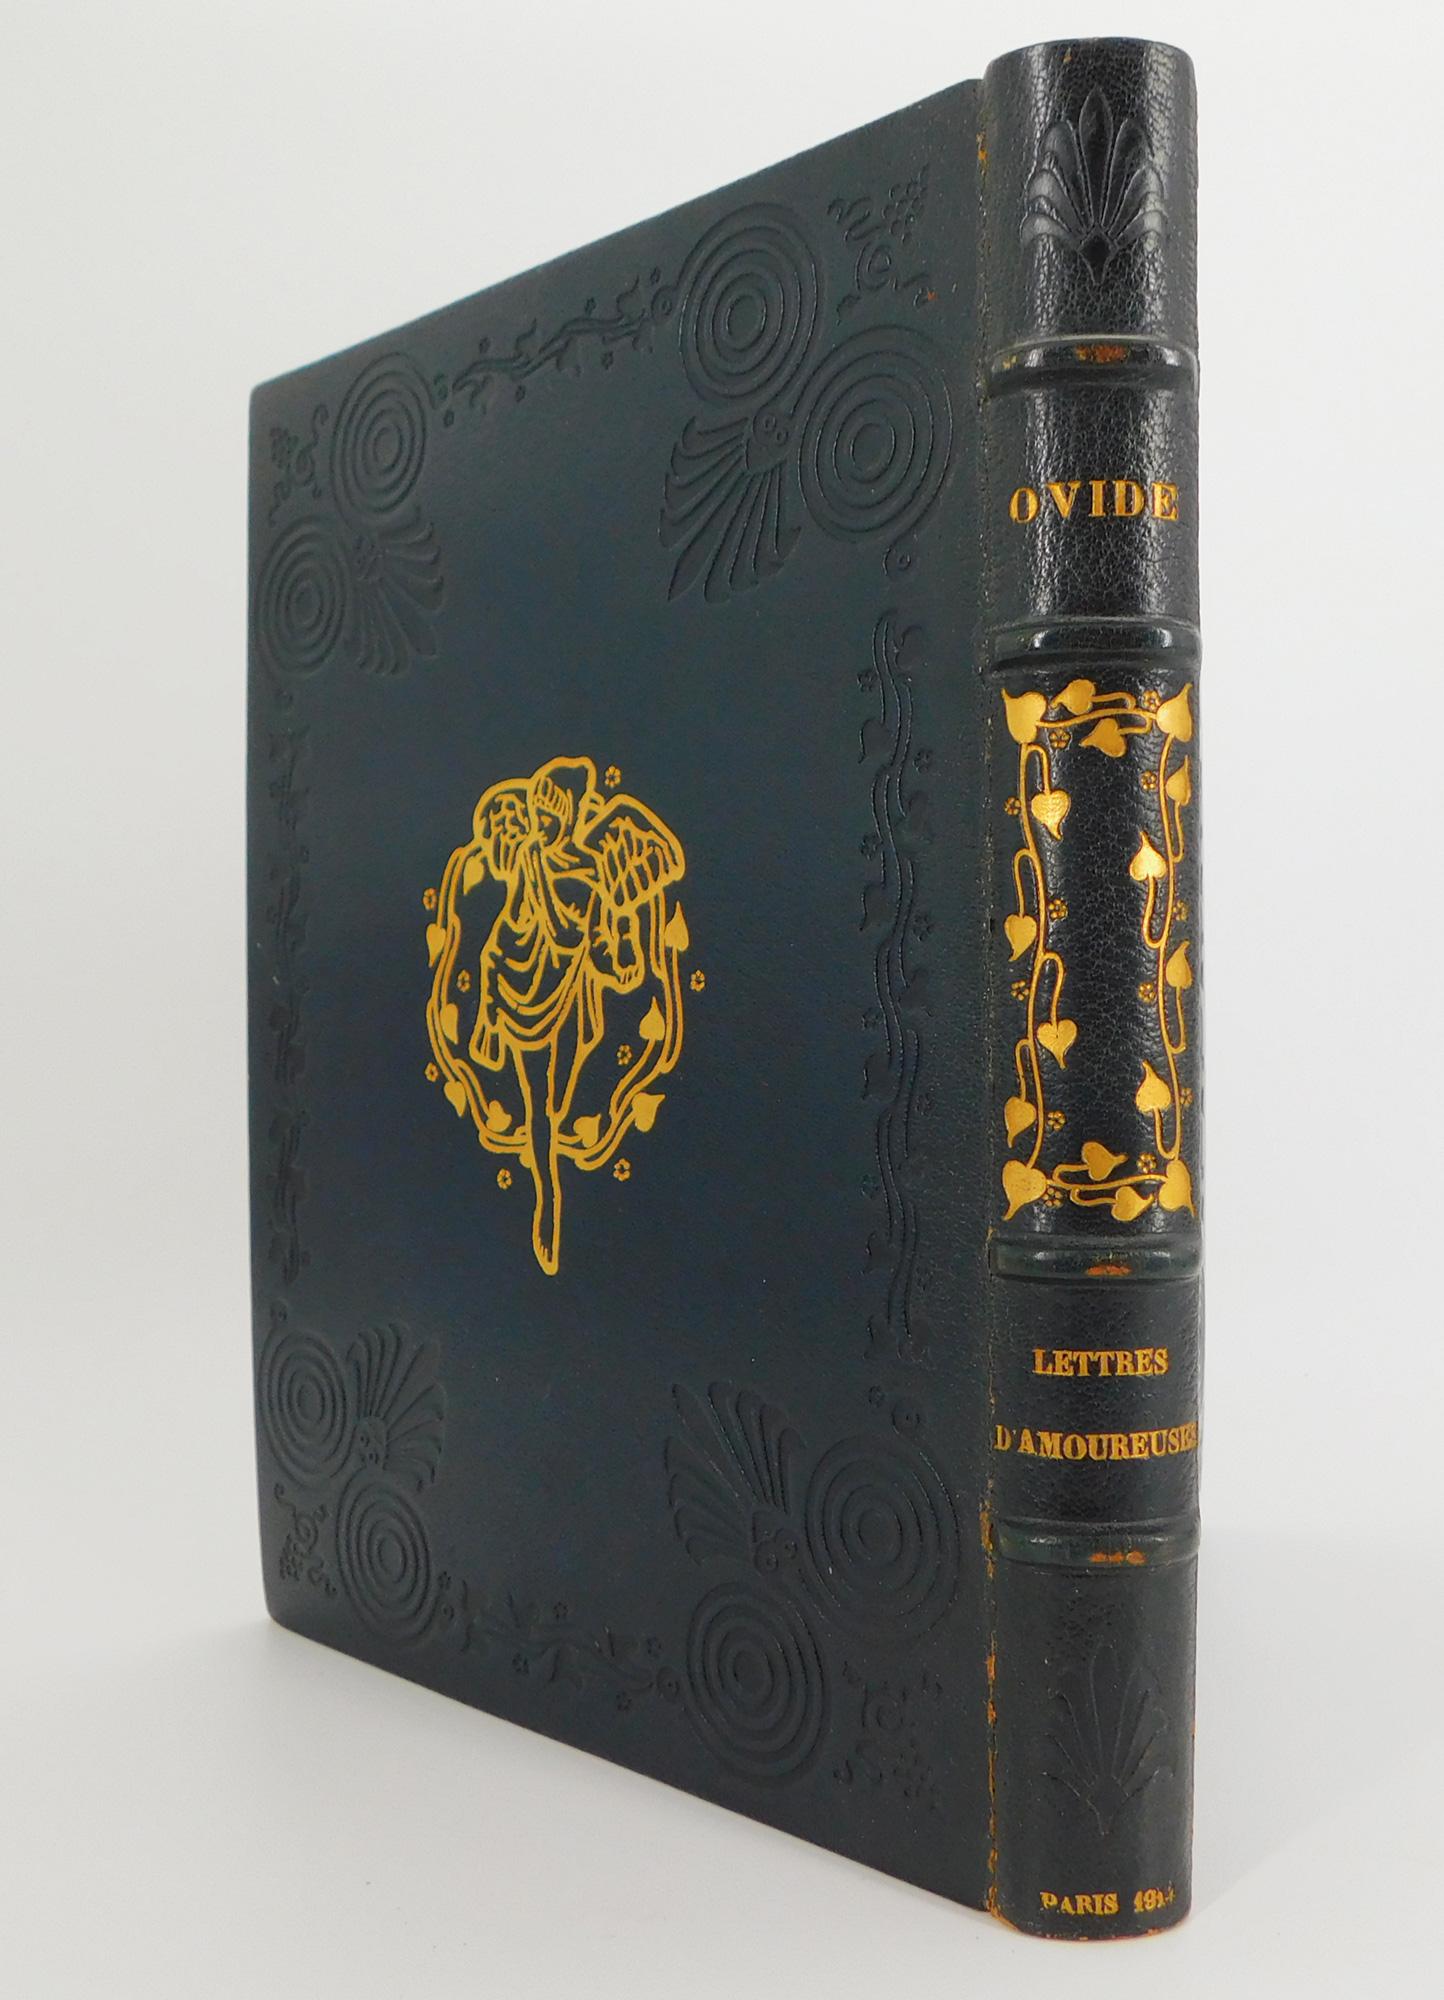 Ovid, Lettres Des Amoureuses, Art Nouveau Illustrations, Binding by R. Kieffer For Sale 3